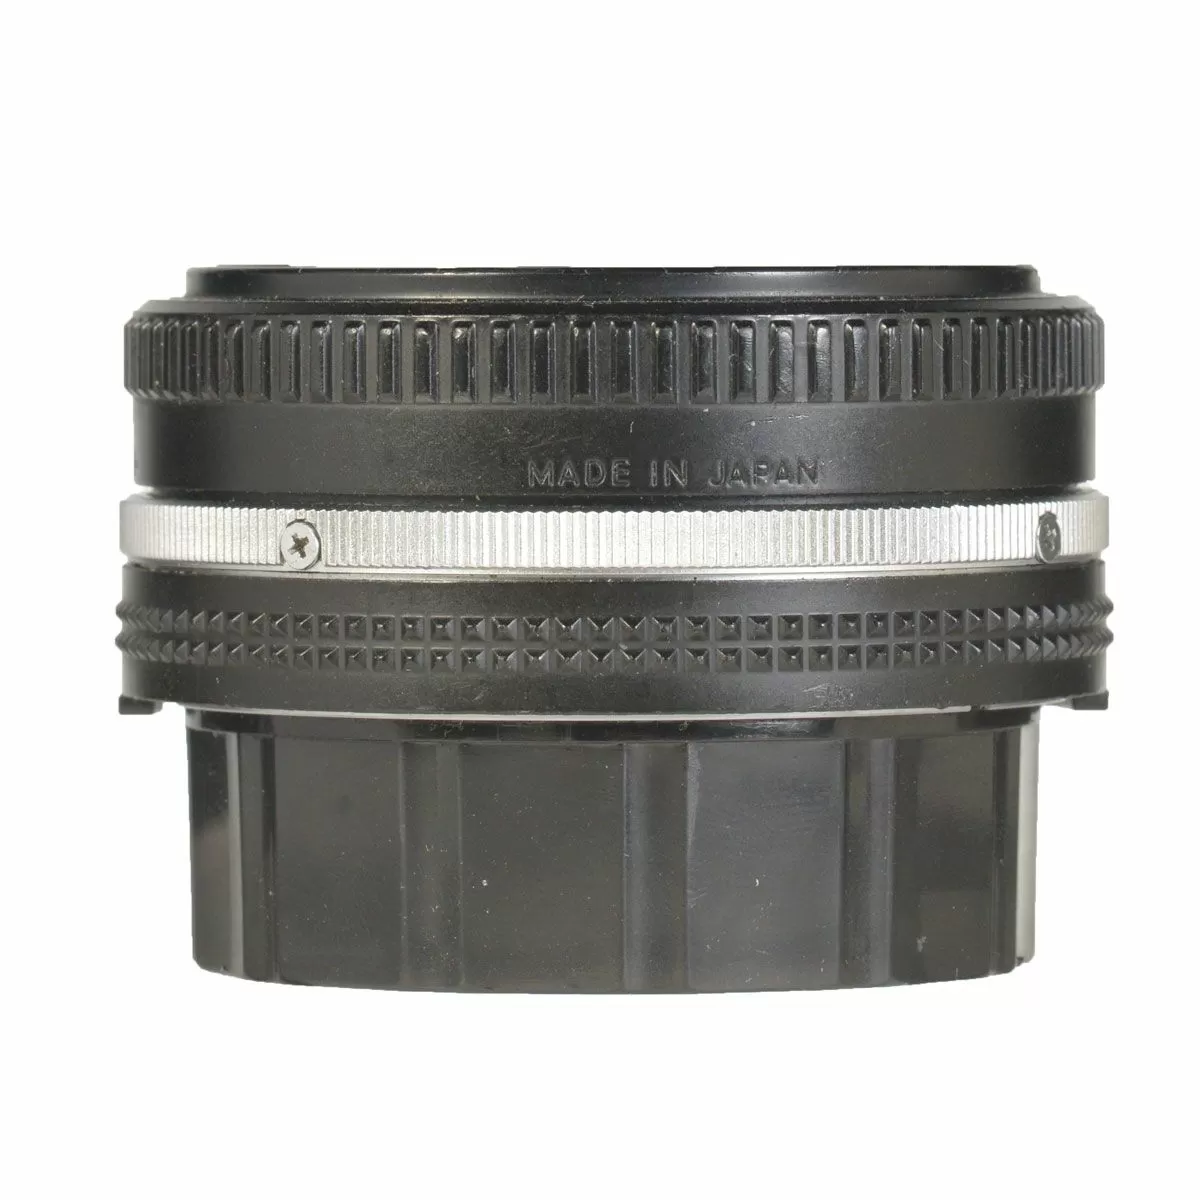 Nikon MF 50mm f/1.8 Ai-S б/у